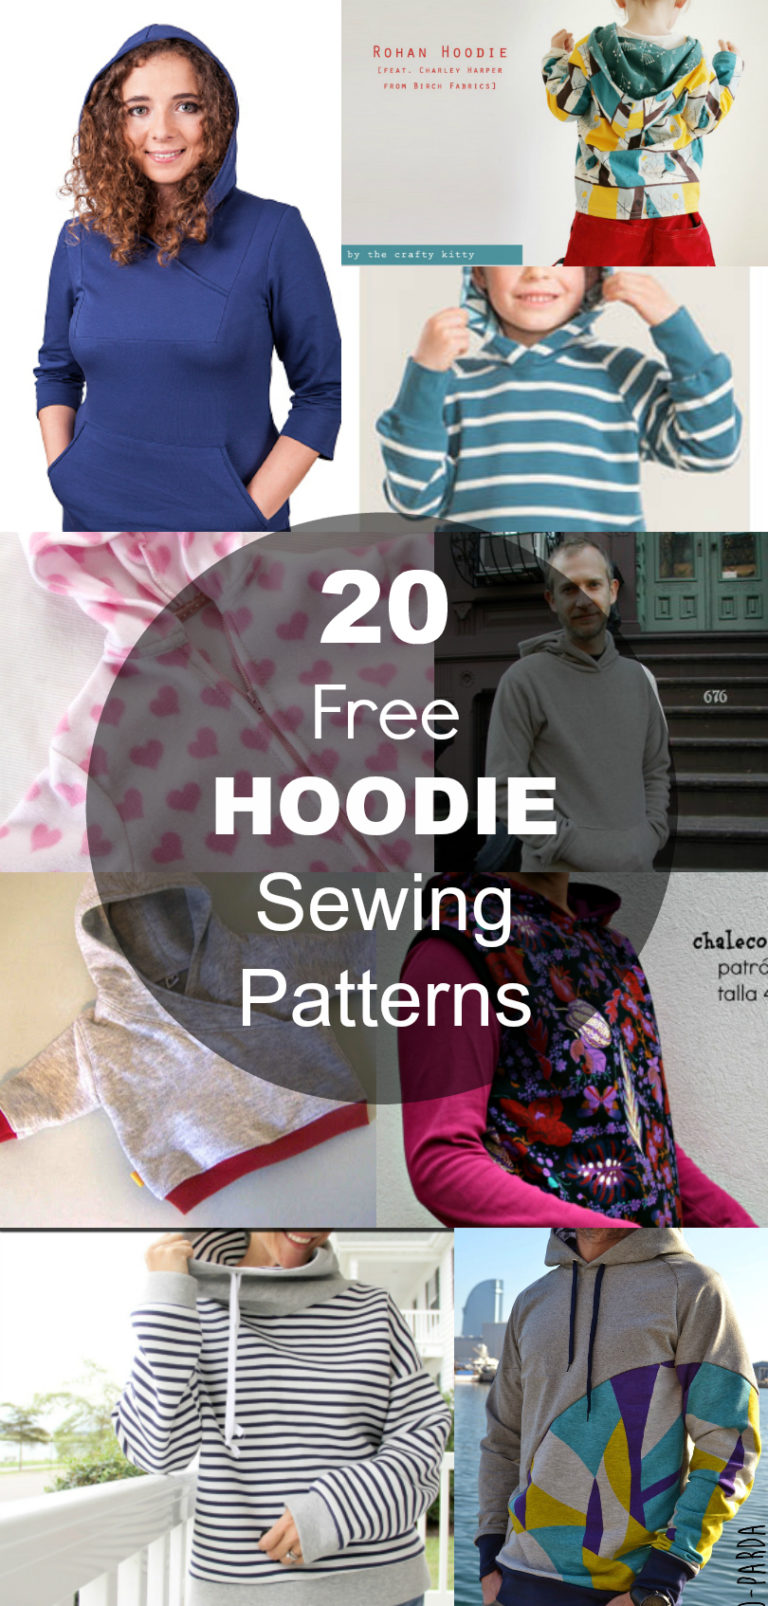 20-hoodie-free-printable-sewing-patterns-on-the-cutting-floor